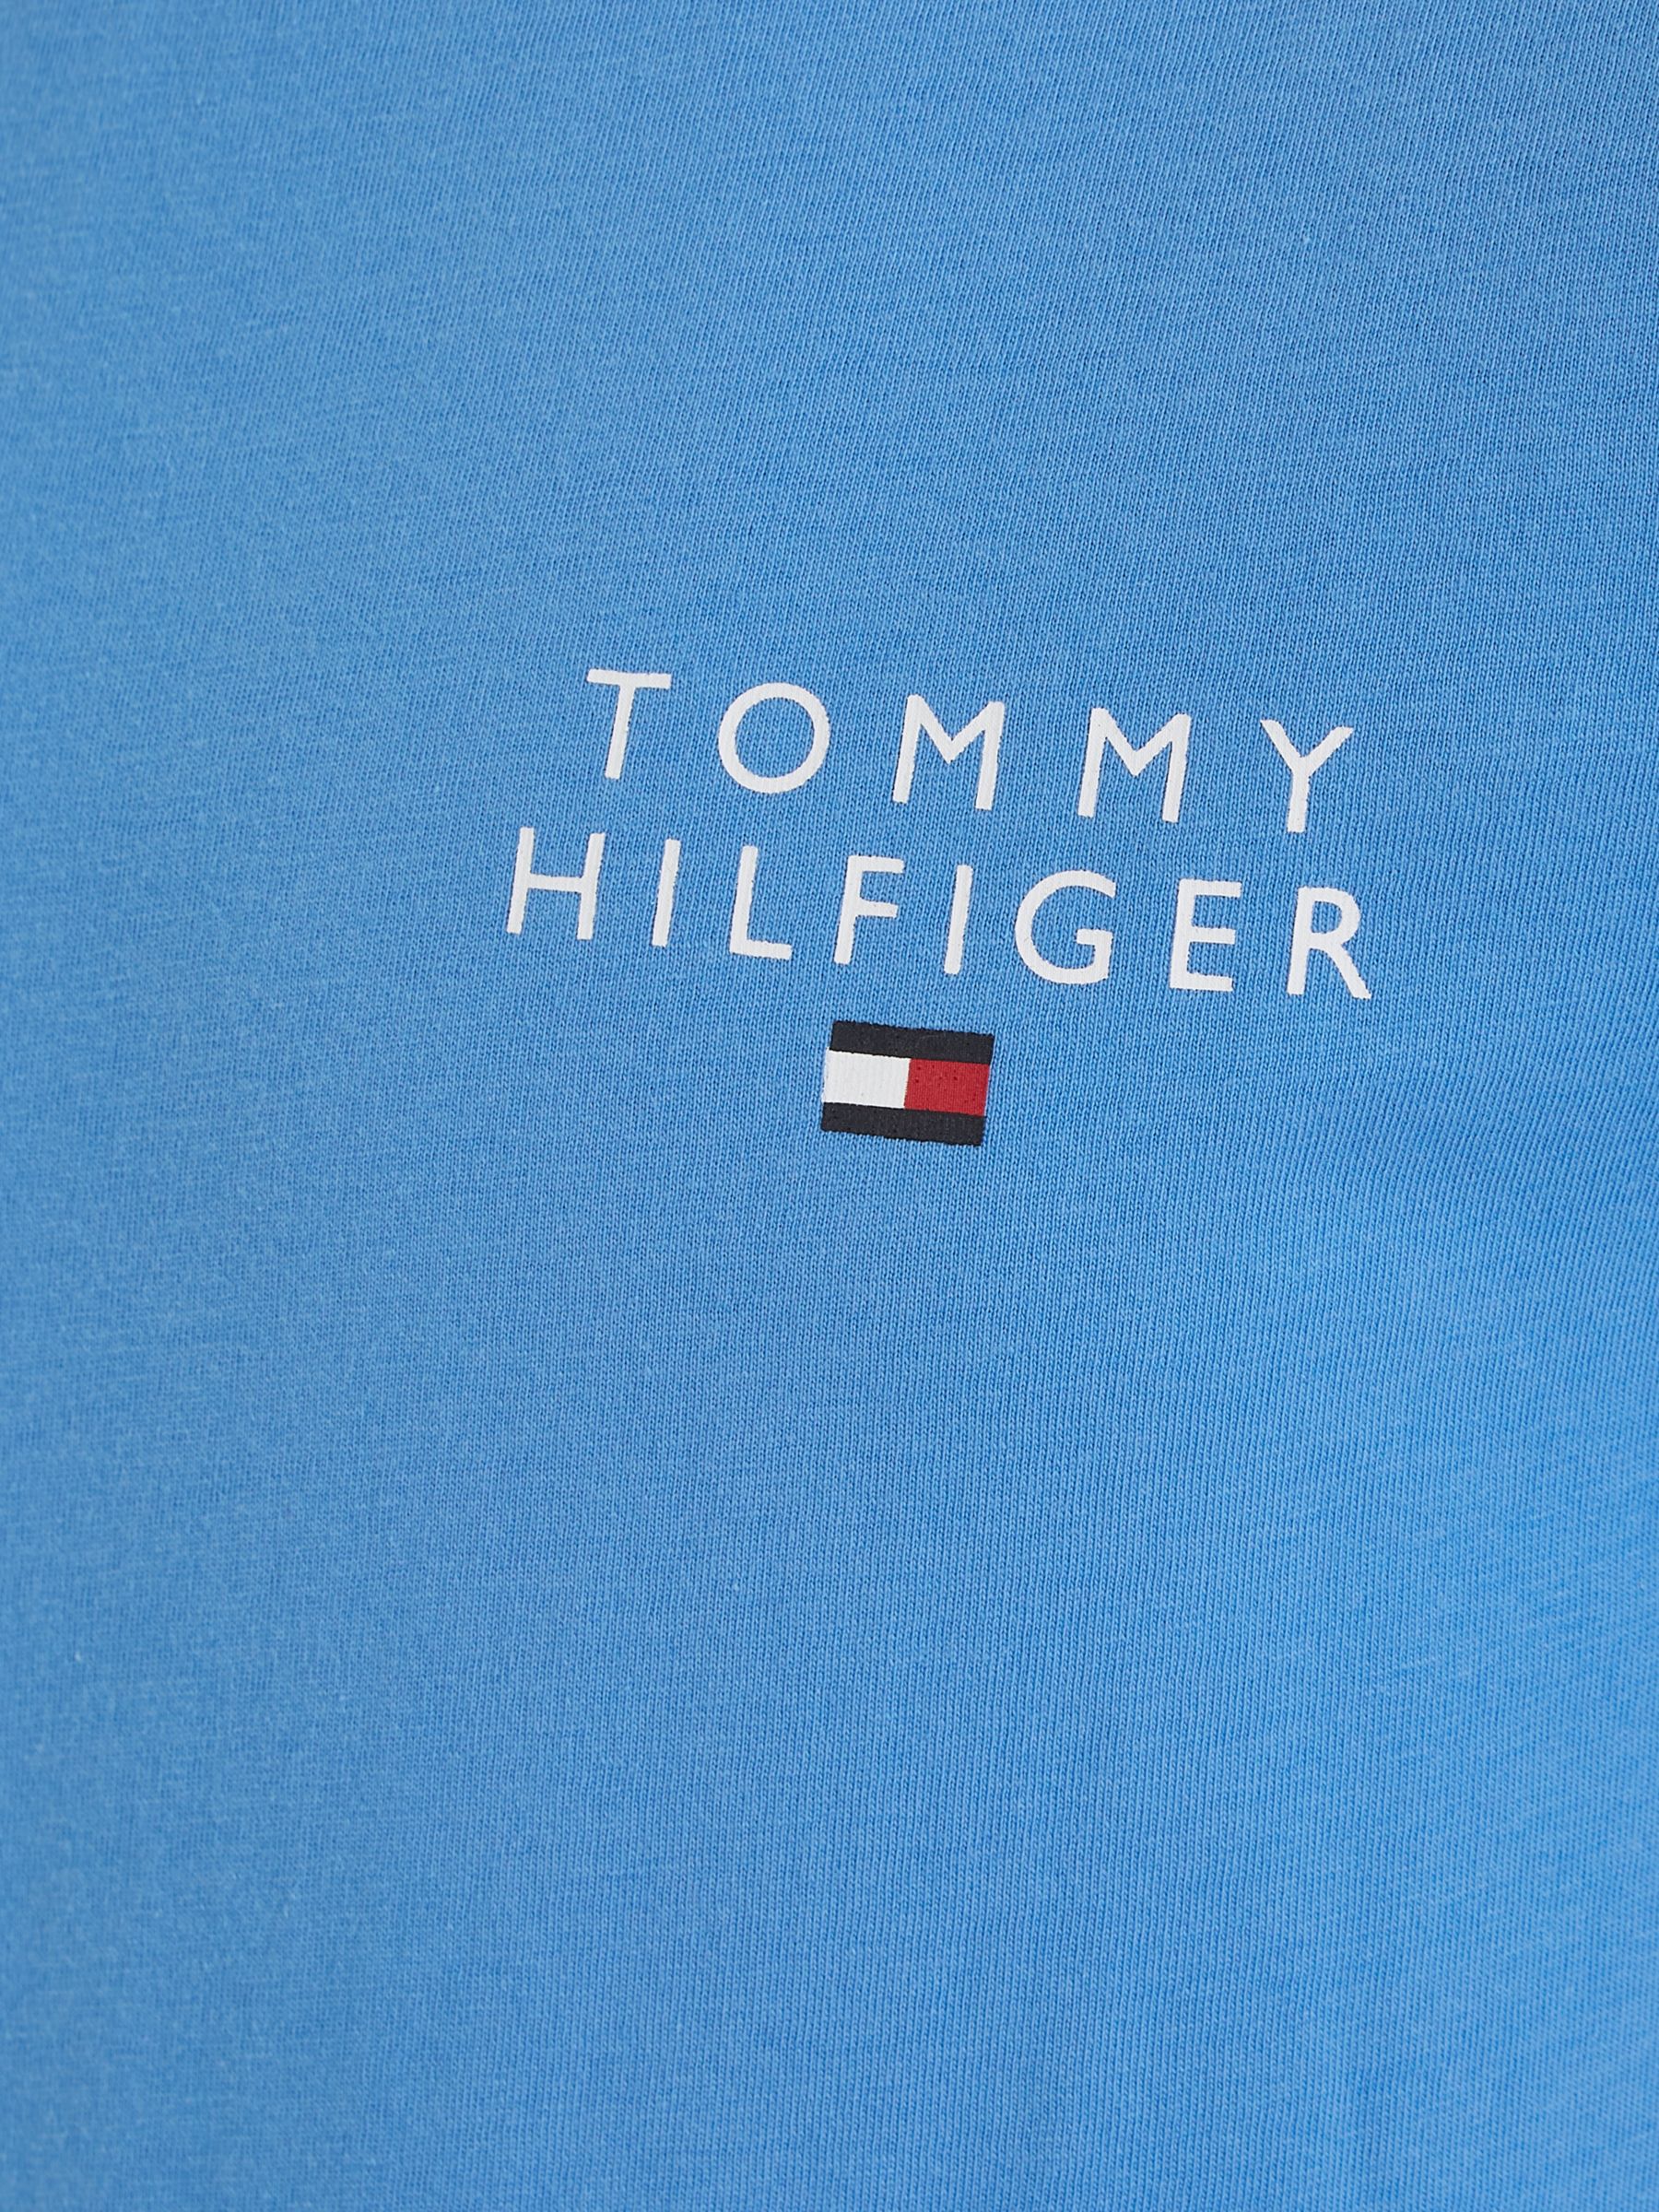 Tommy Hilfiger Kids' Short Sleeve Top & Shorts Pyjama Set, Blue, 10-12 years